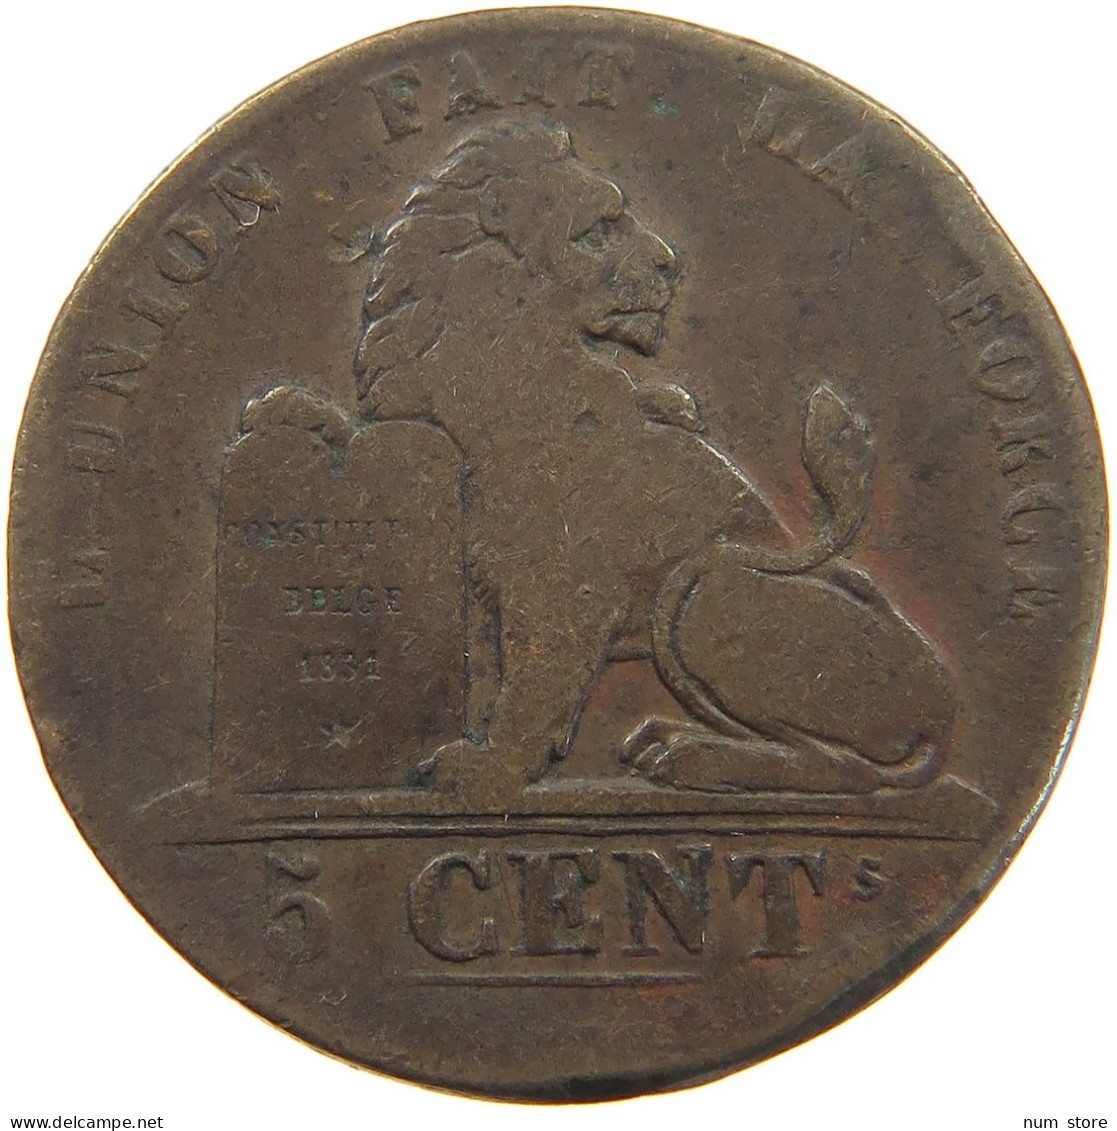 BELGIUM 5 CENTIMES 1837 Leopold I. (1831-1865) #a041 0463 - 5 Centimes